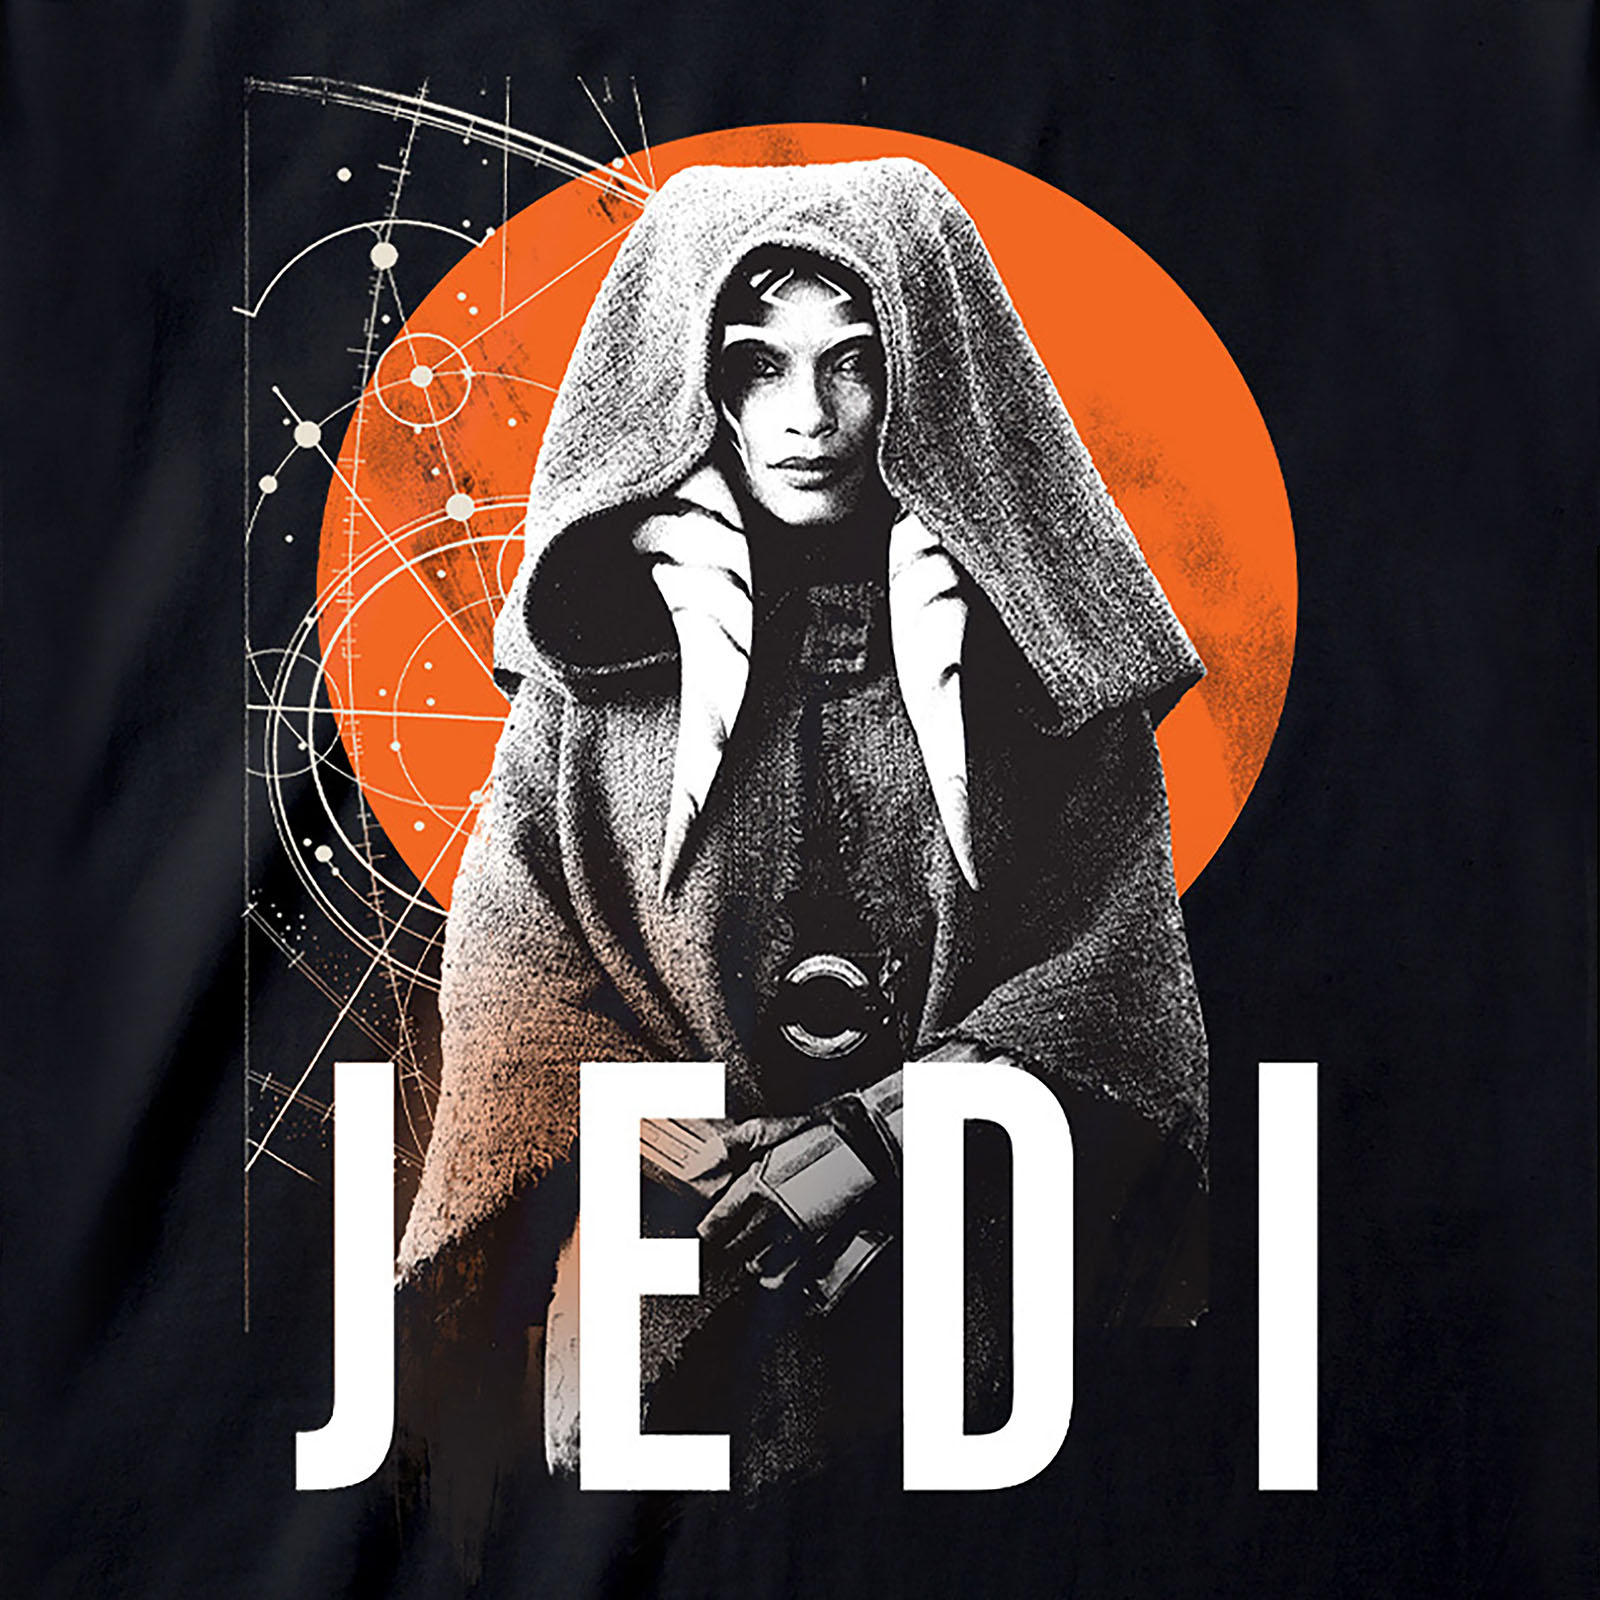 Star Wars - T-shirt Jedi Ahsoka noir